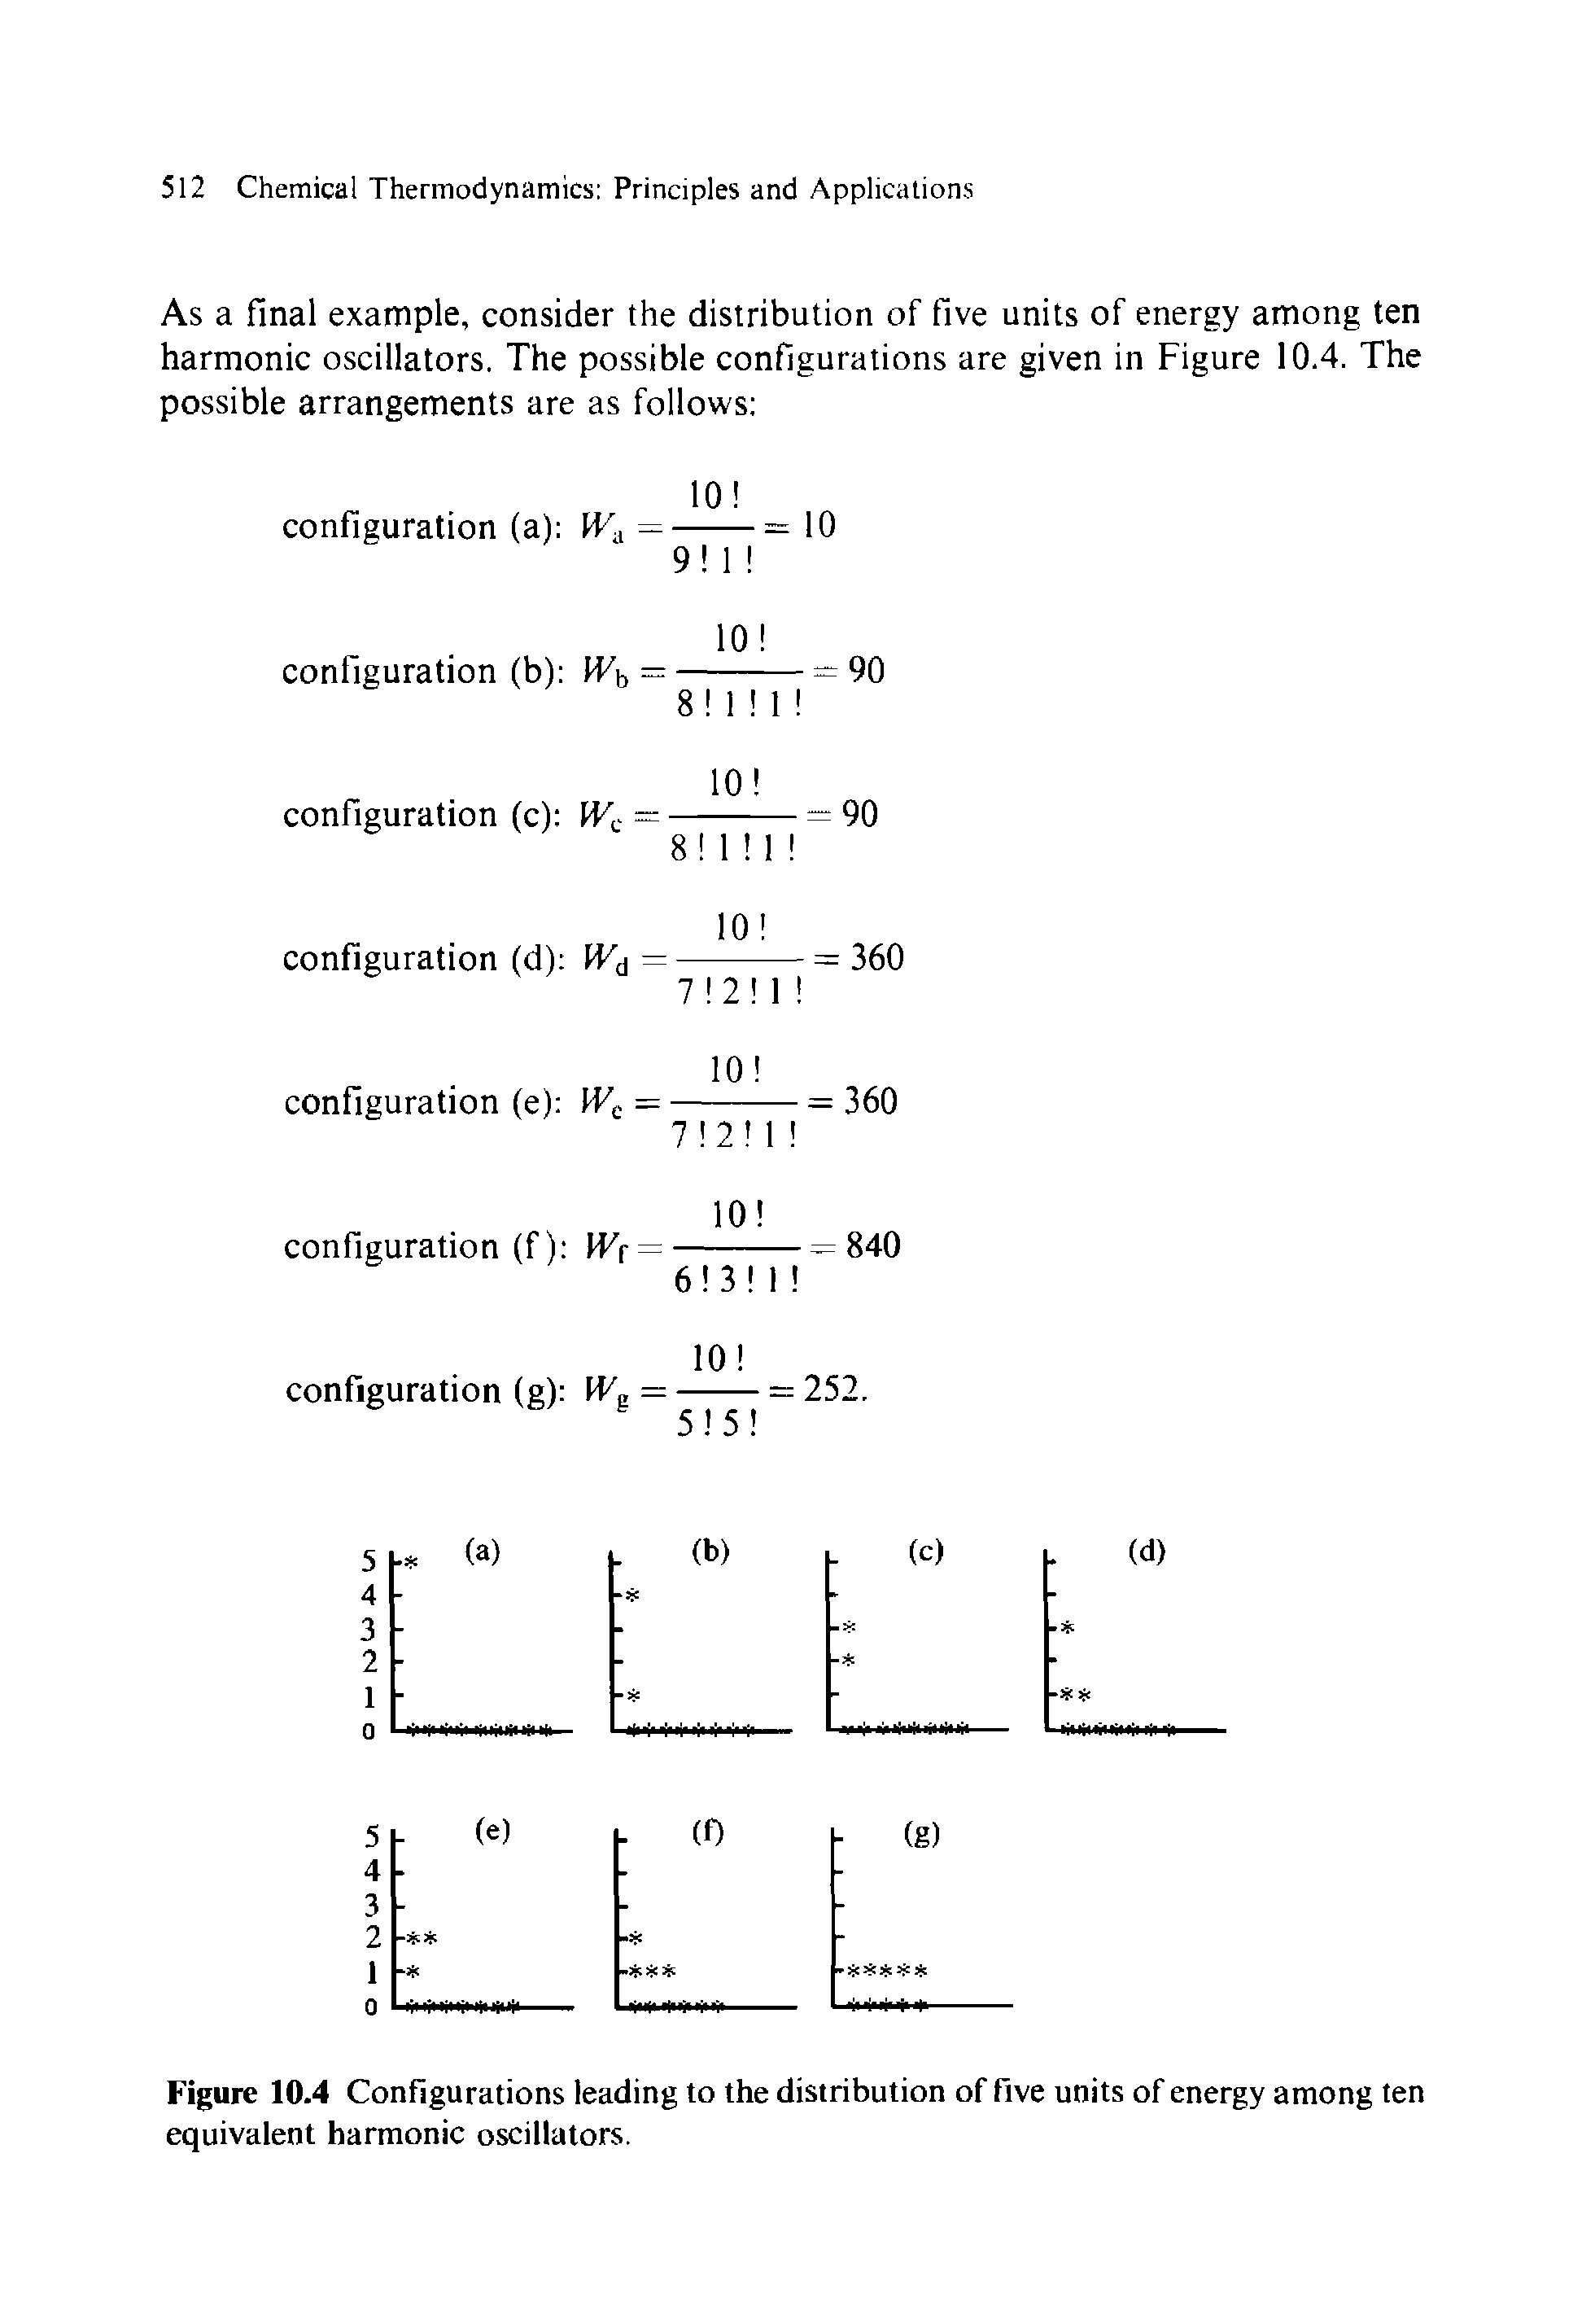 Figure 10.4 Configurations leading to the distribution of five units of energy among ten equivalent harmonic oscillators.